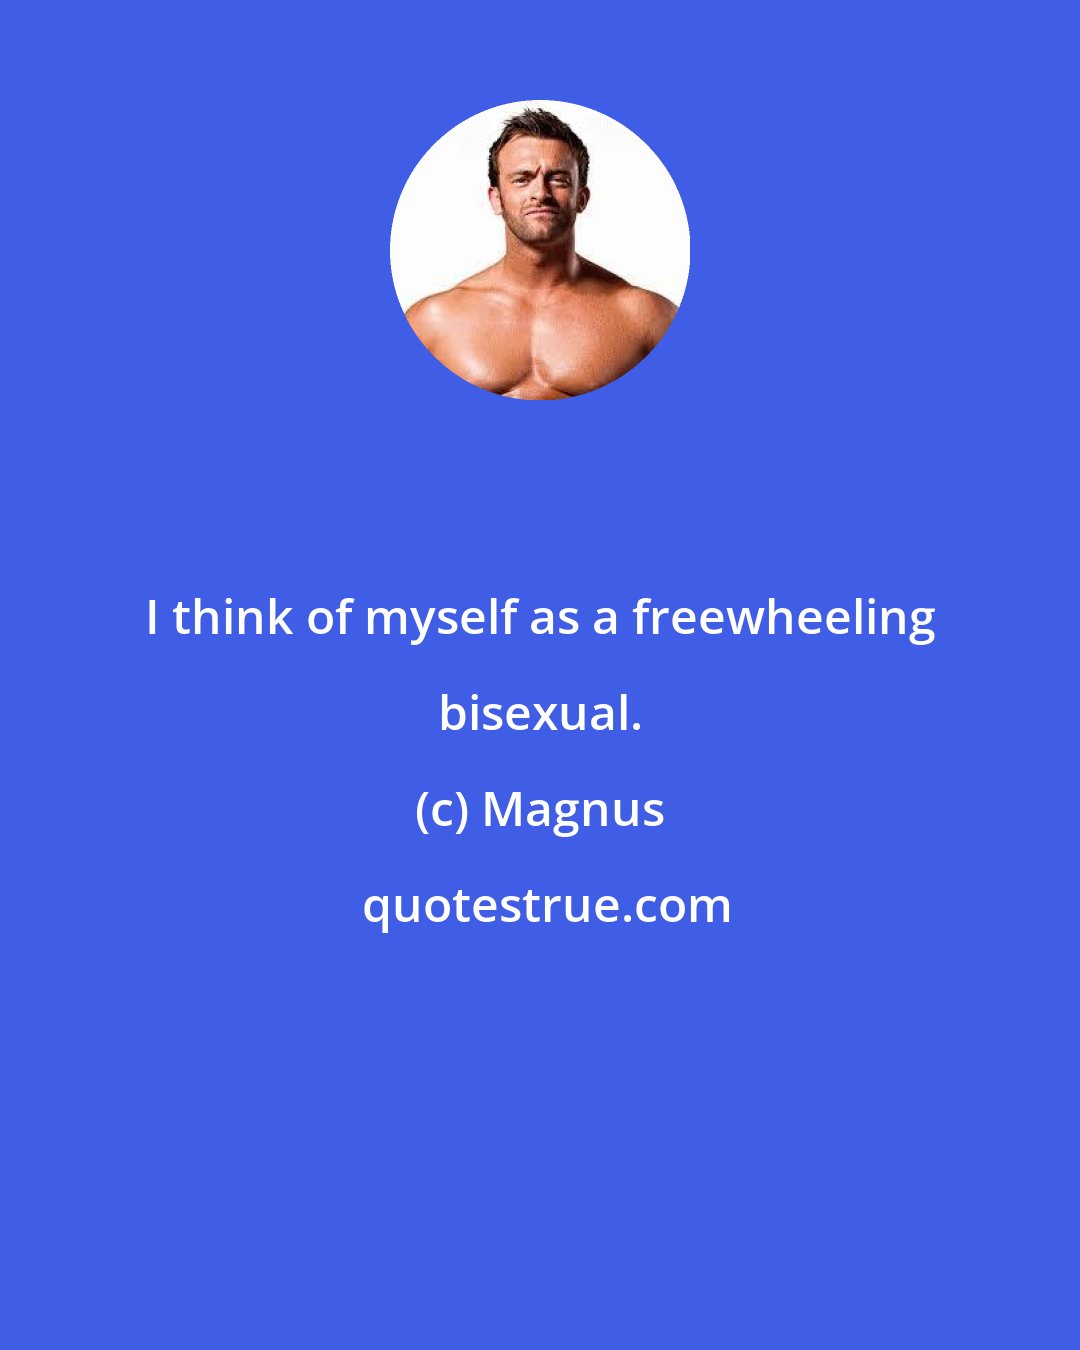 Magnus: I think of myself as a freewheeling bisexual.